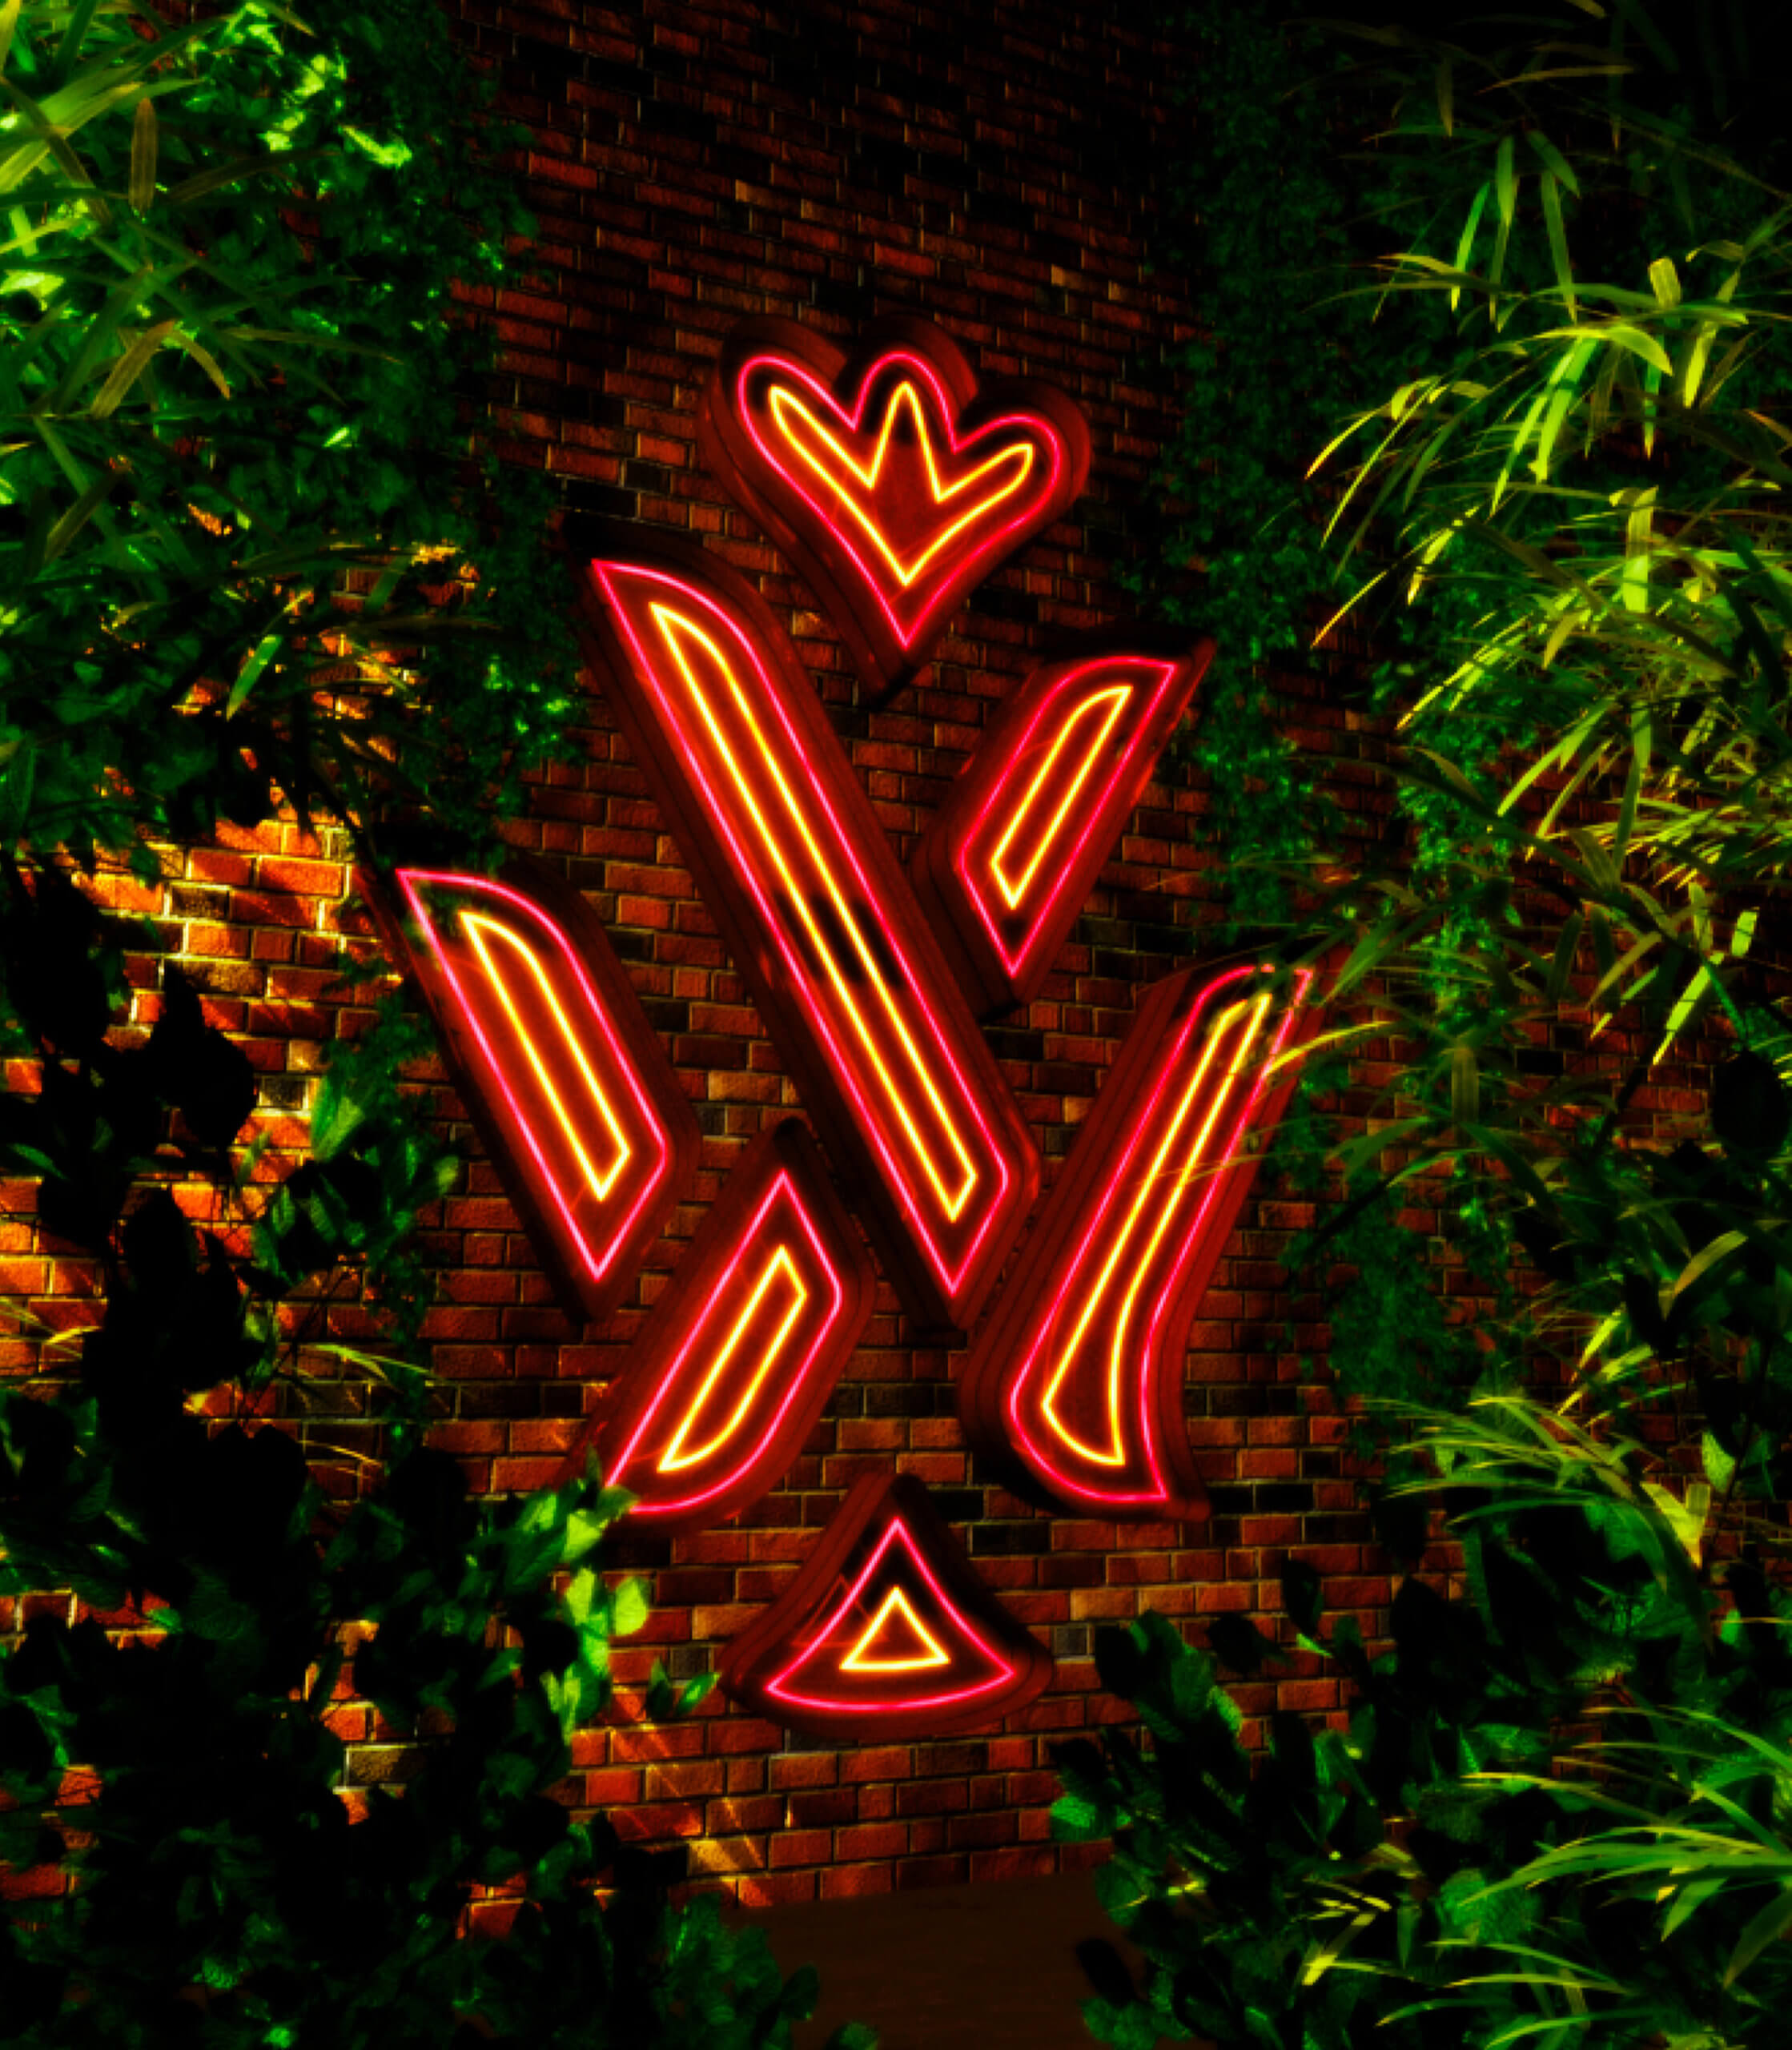 Wonderyard restaurant neon exterior sign design